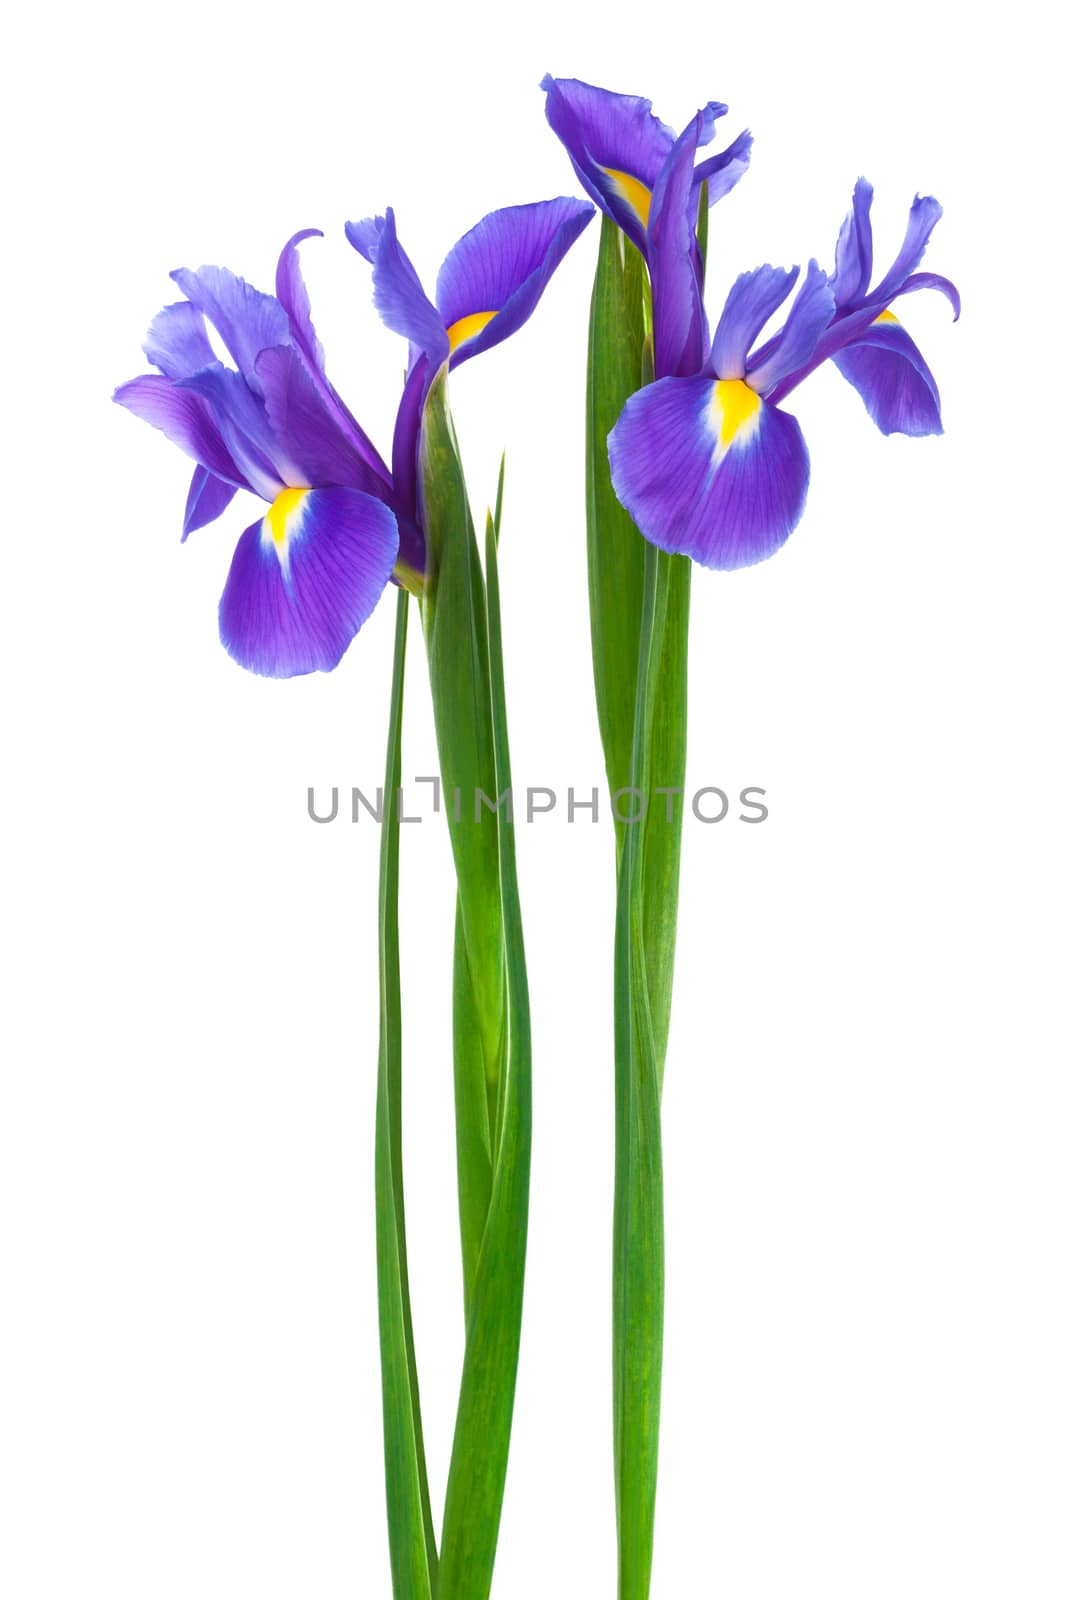 two purple iris on a white background